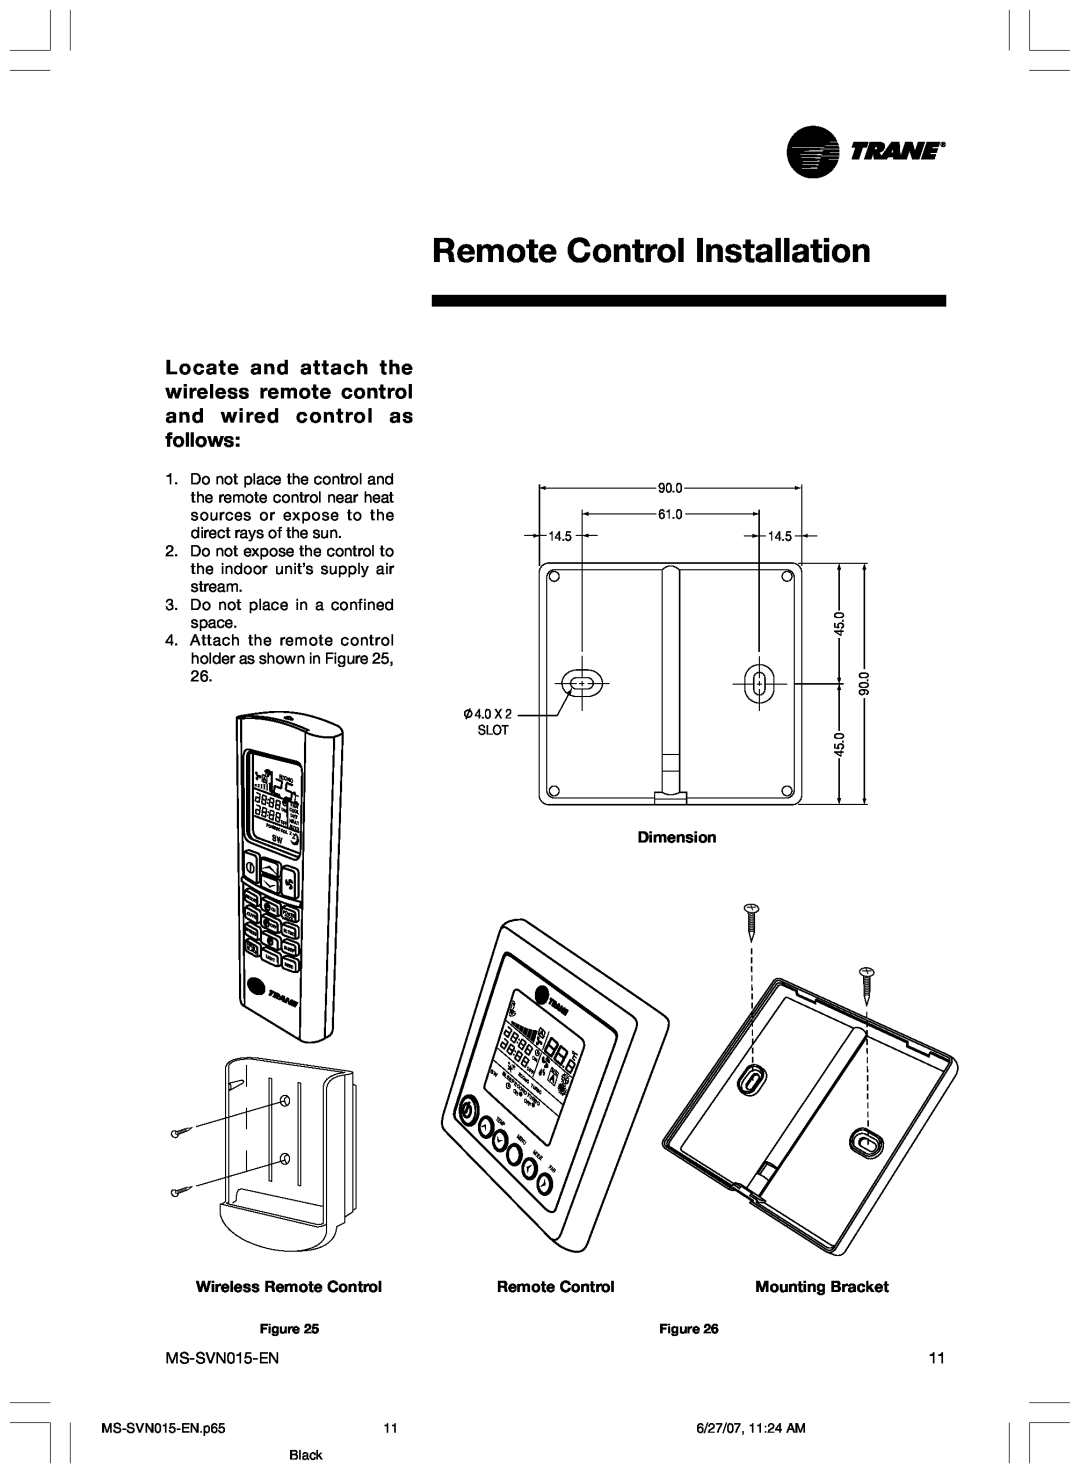 Trane MS-SVN015-EN installation manual Remote Control Installation, Dimension, Mounting Bracket 